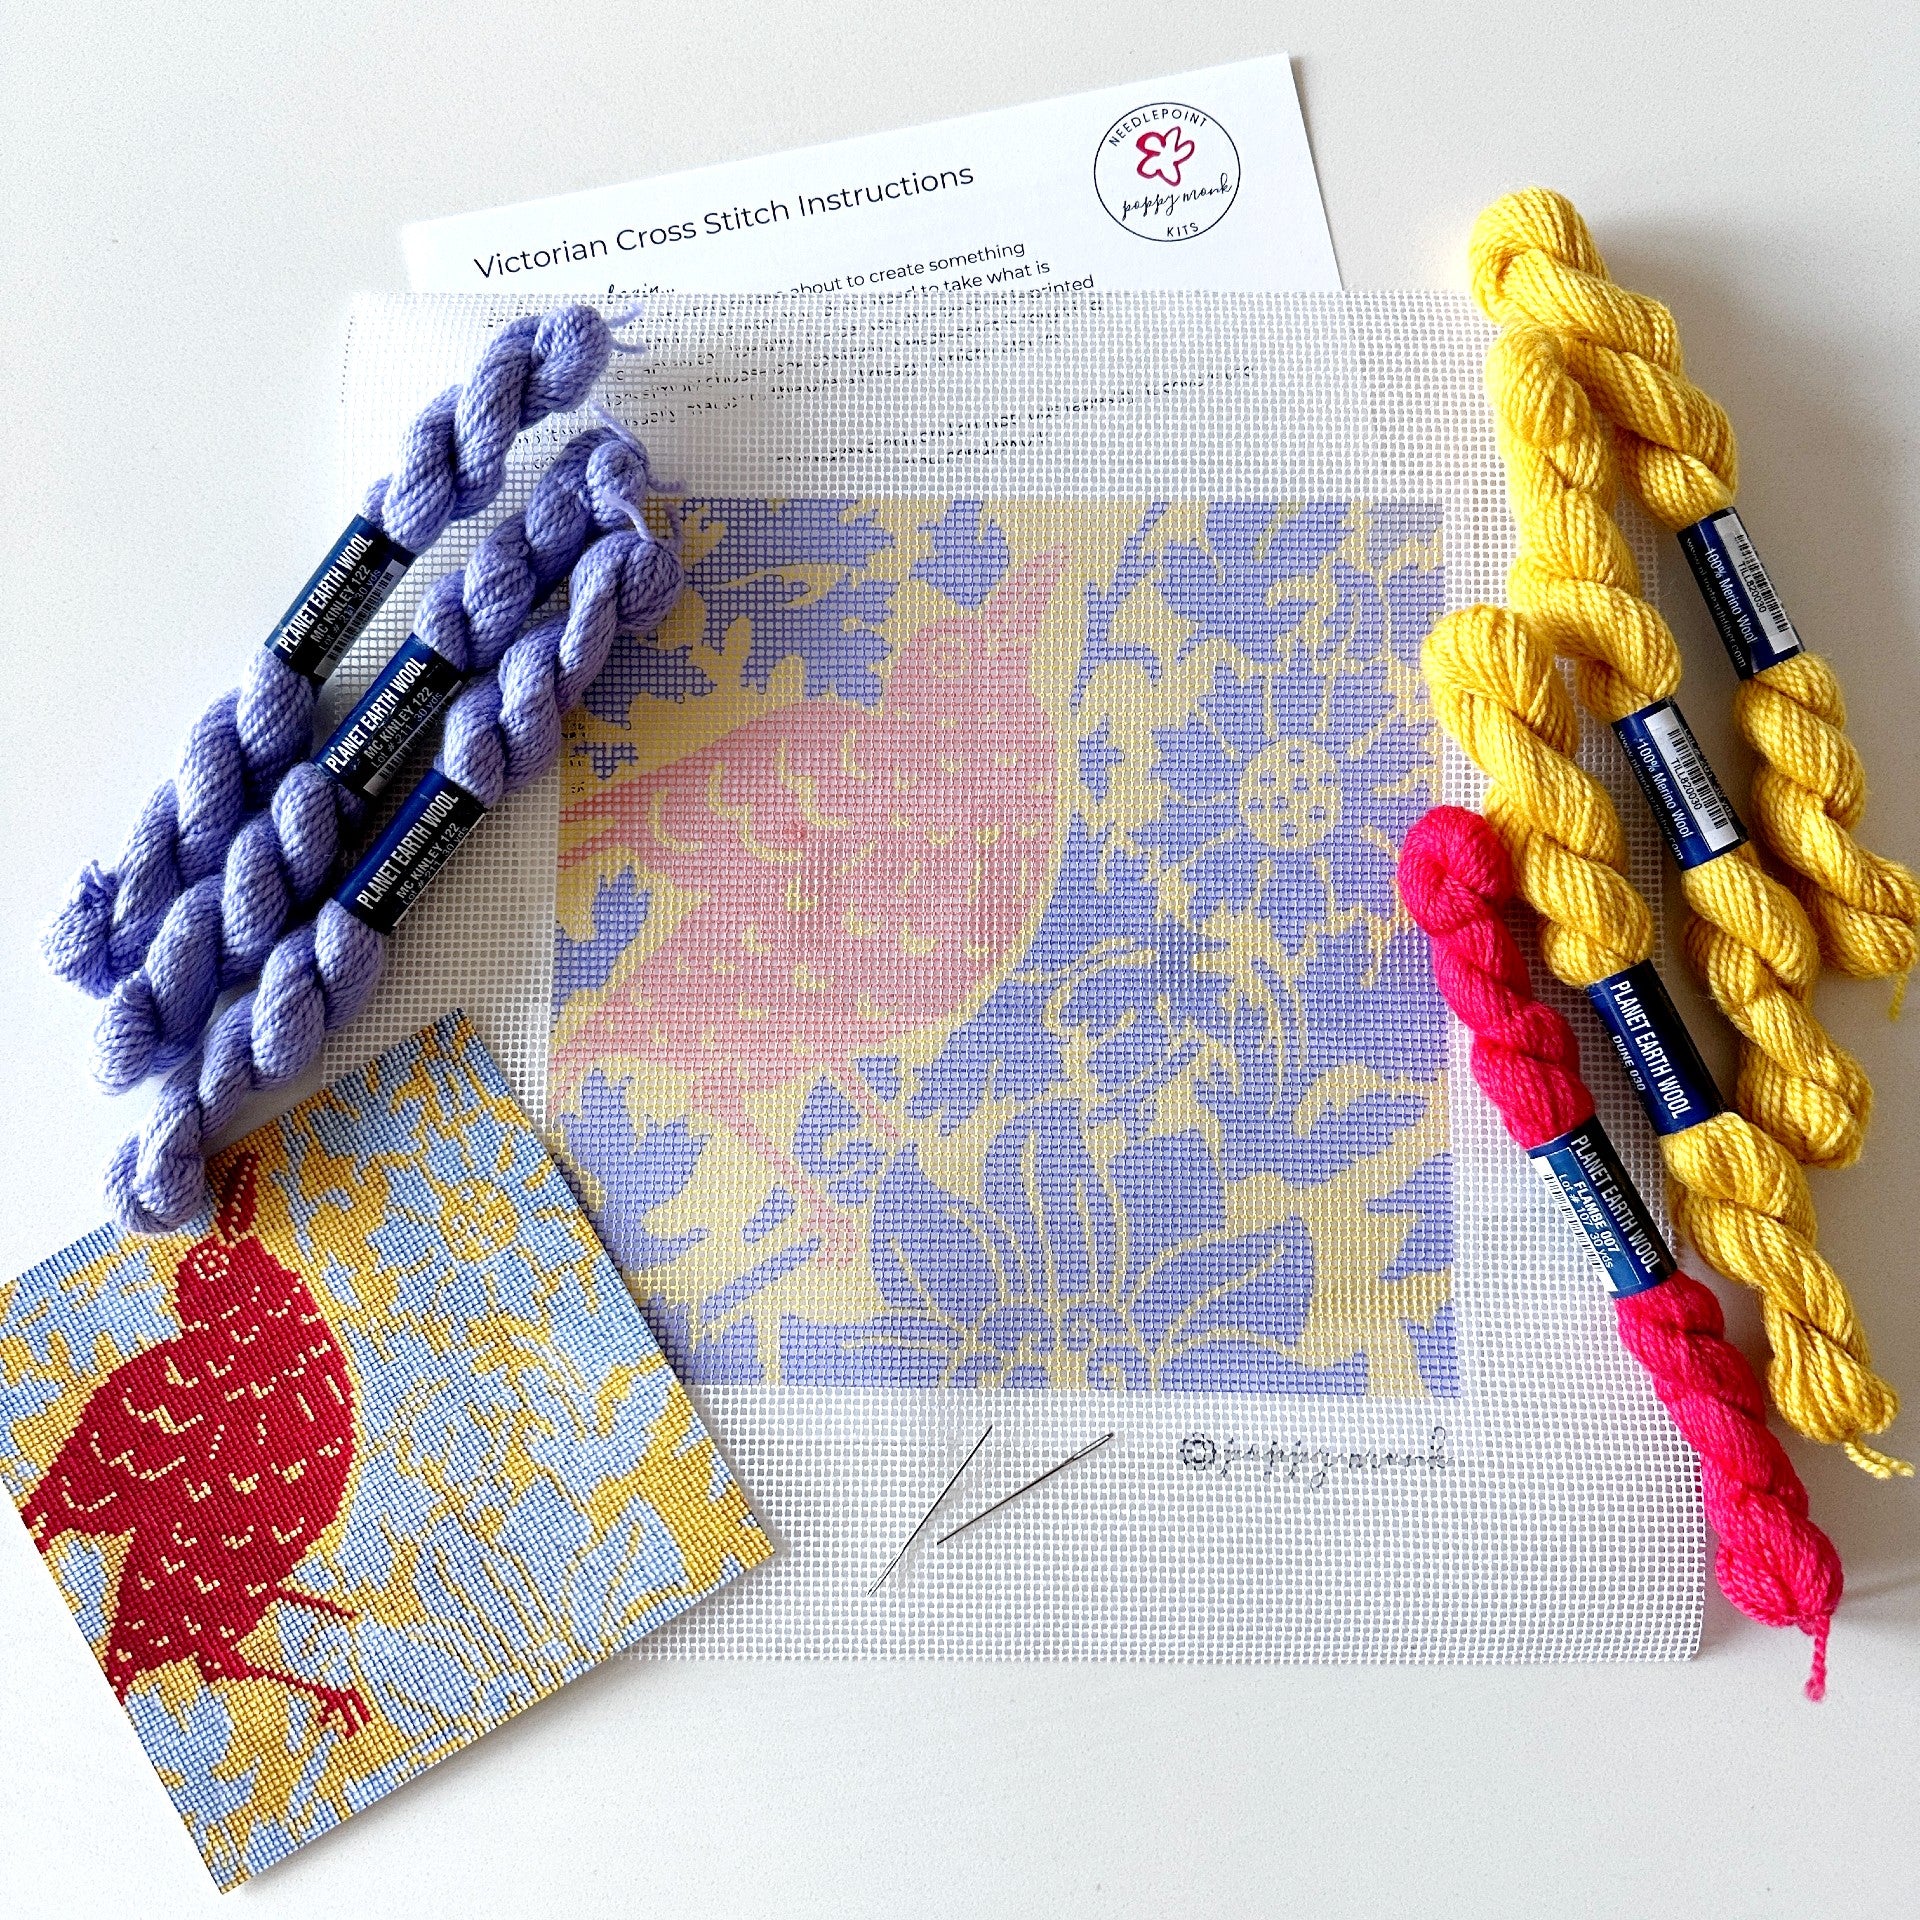 Bird and Anemone Victorian Cross Stitch needlepoint kit similar to Elizabeth Bradley needlepoint kits.